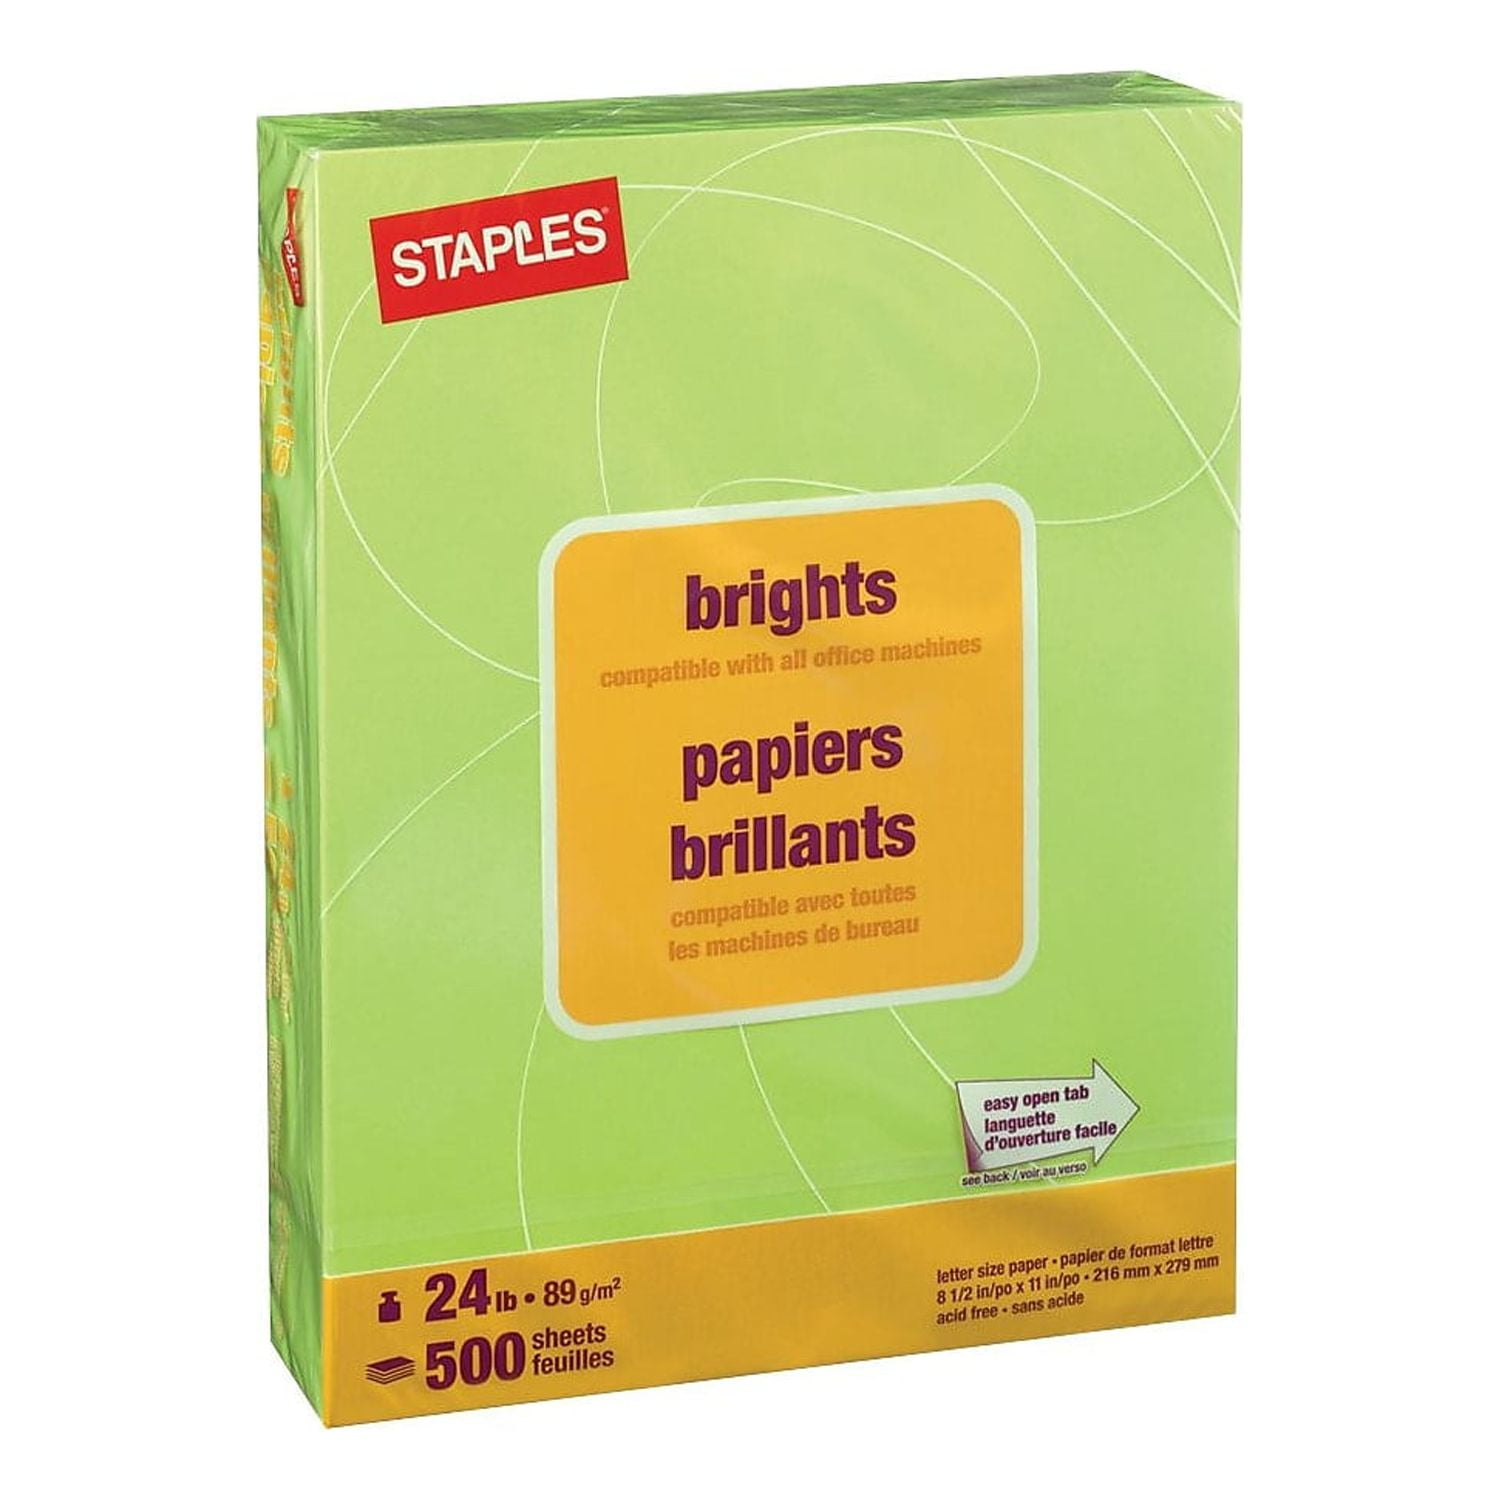 Basics 8-Sheet Strip-Cut Paper, CD, and Credit Card Shredder &  Multipurpose Copy Printer Paper, 8.5 x 11 Inch 20Lb Paper - 8 Ream Case  (4,000